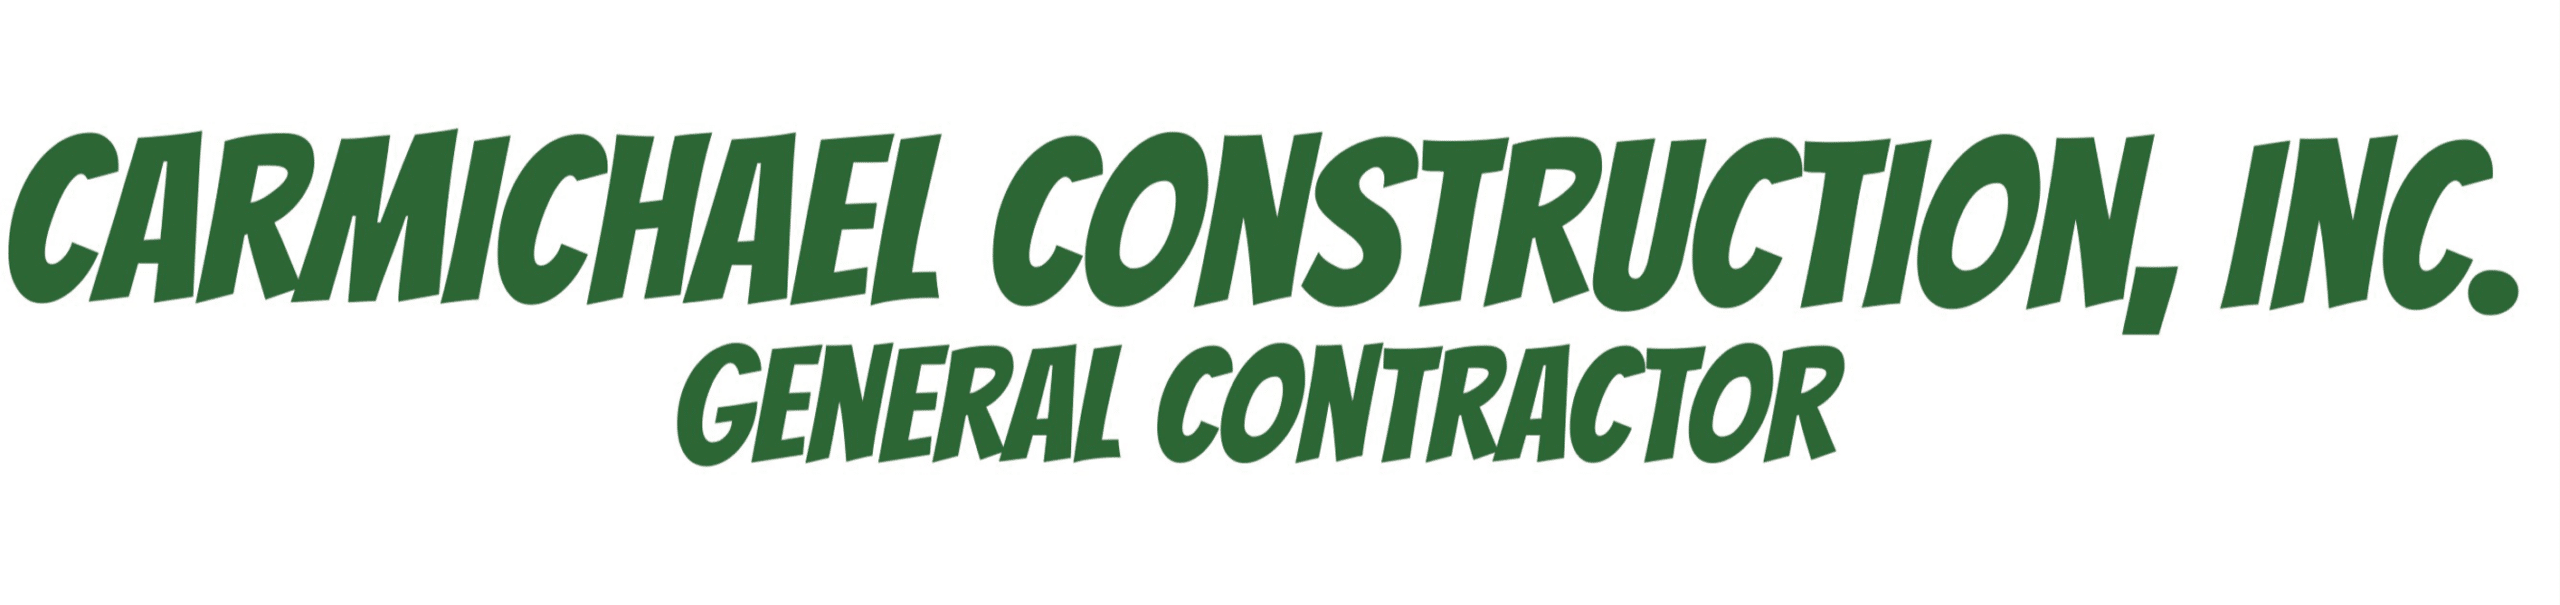 Carmichael Construction, Inc. General Contractor